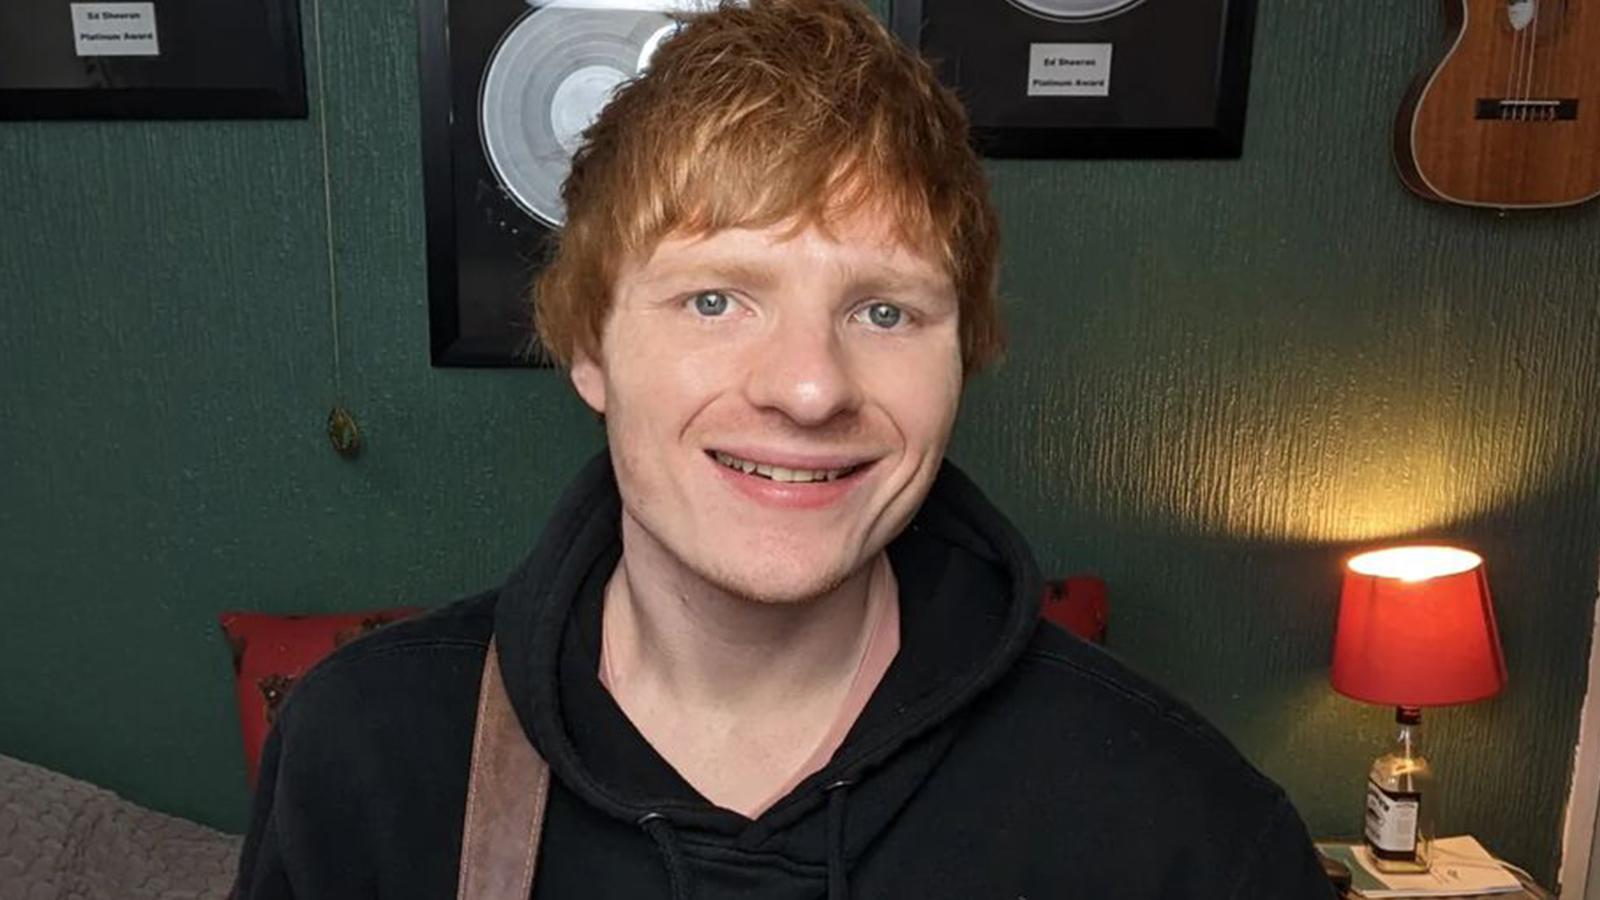 Ed Sheeran's lookalike, Ty Jones, smiles for the camera.